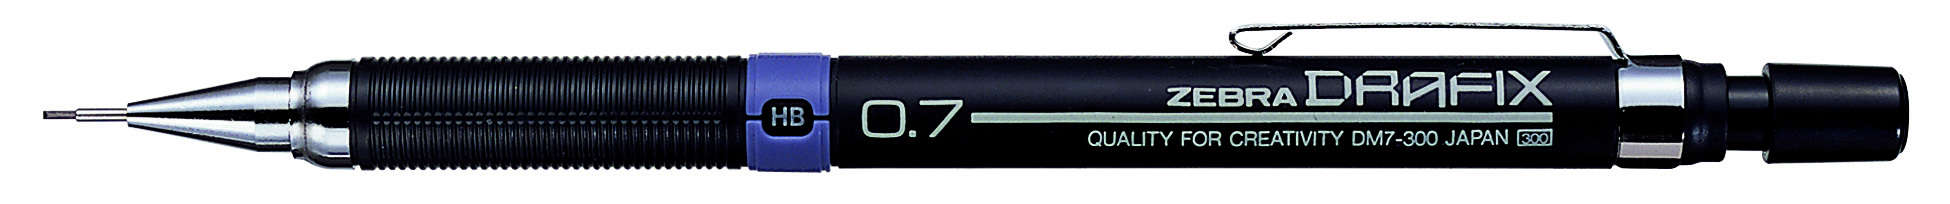 Drafix 0.7mm technical mechanical pencil 1